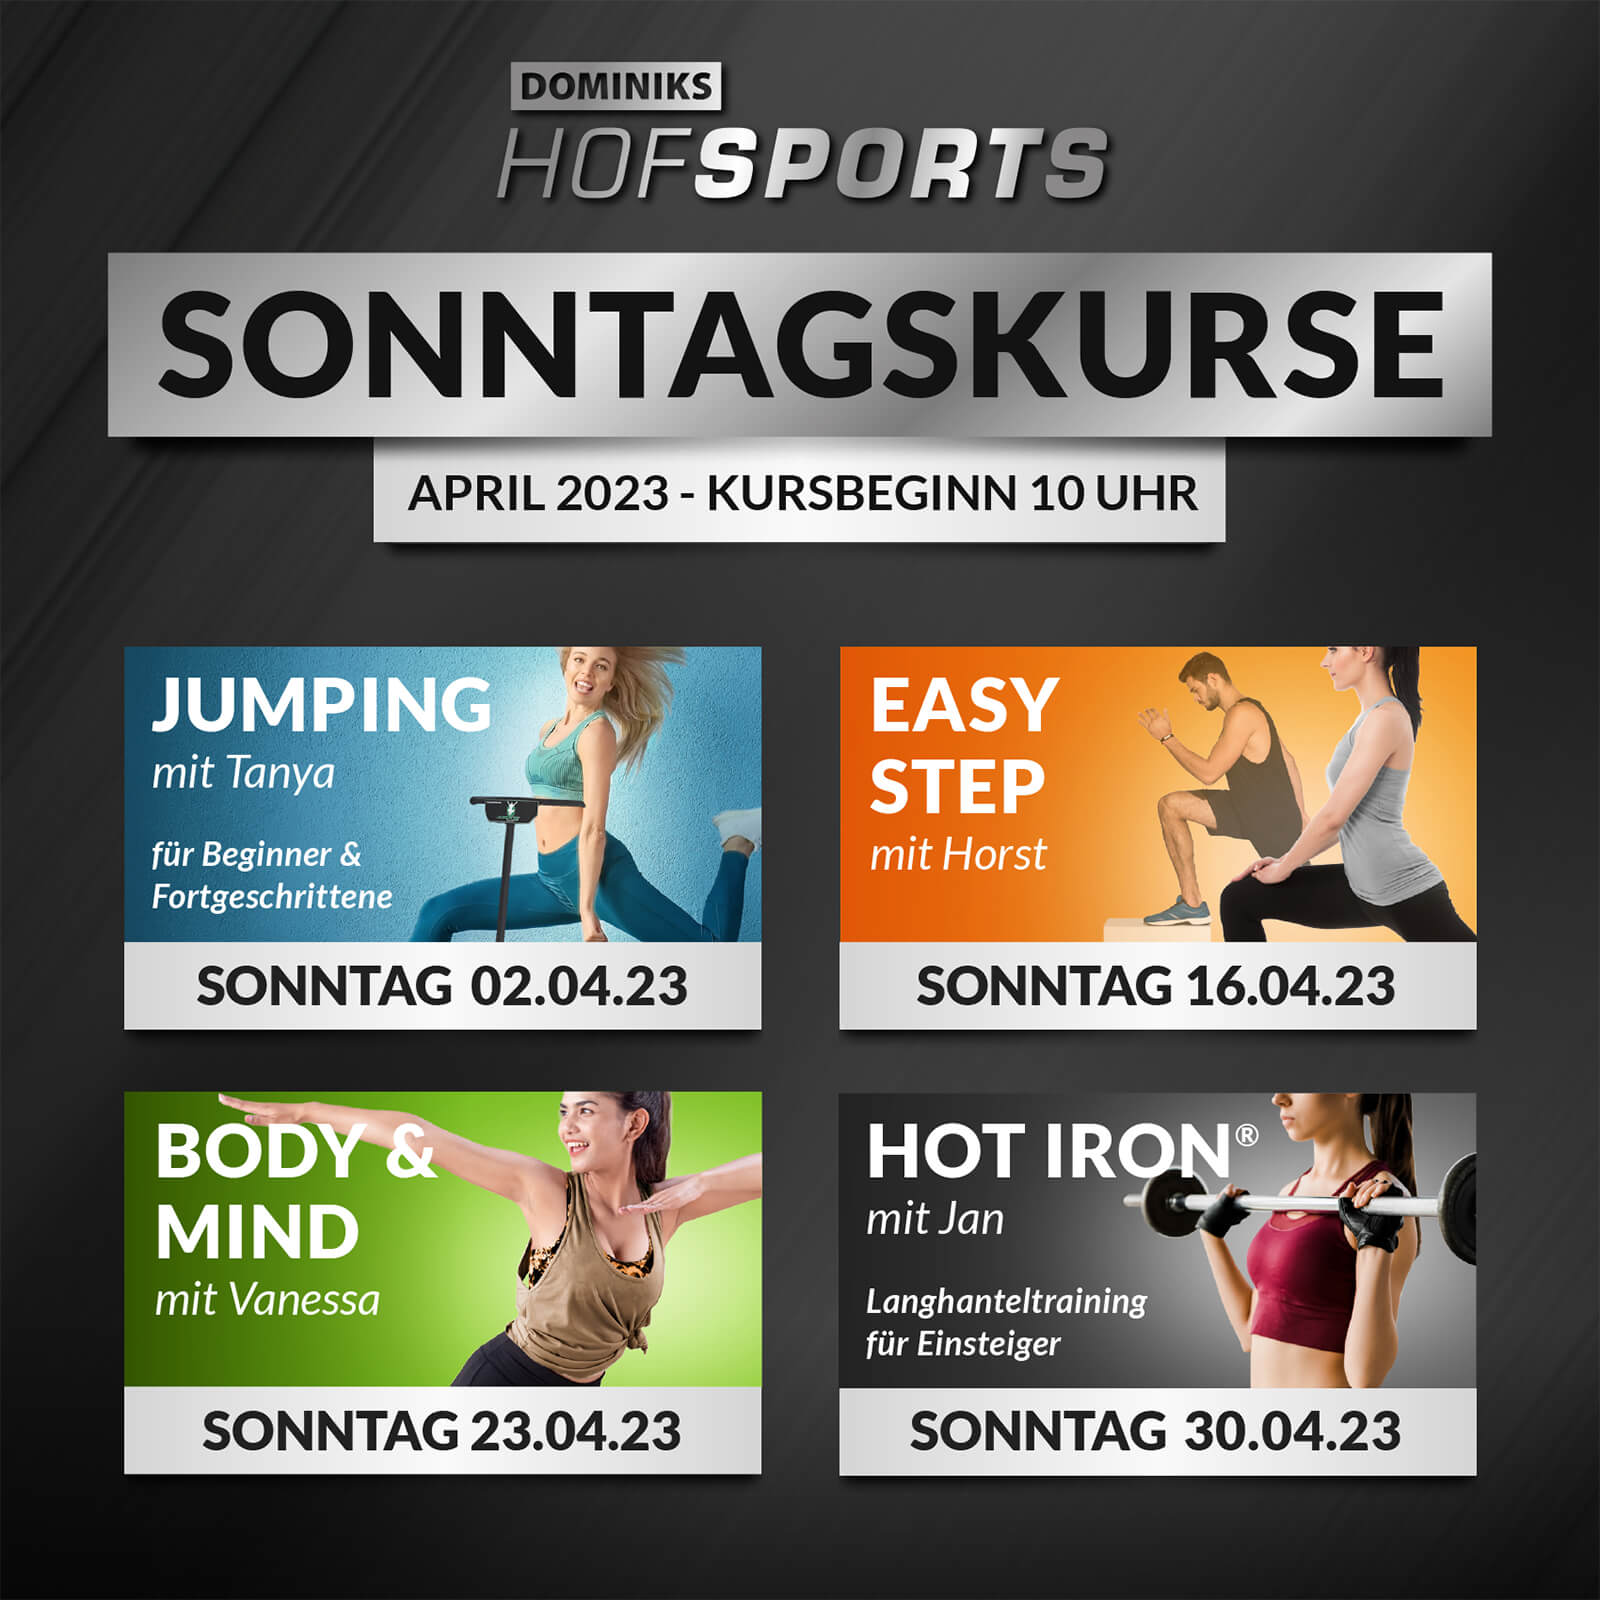 DOMINIKS HofSports Sonntagskurse April2023